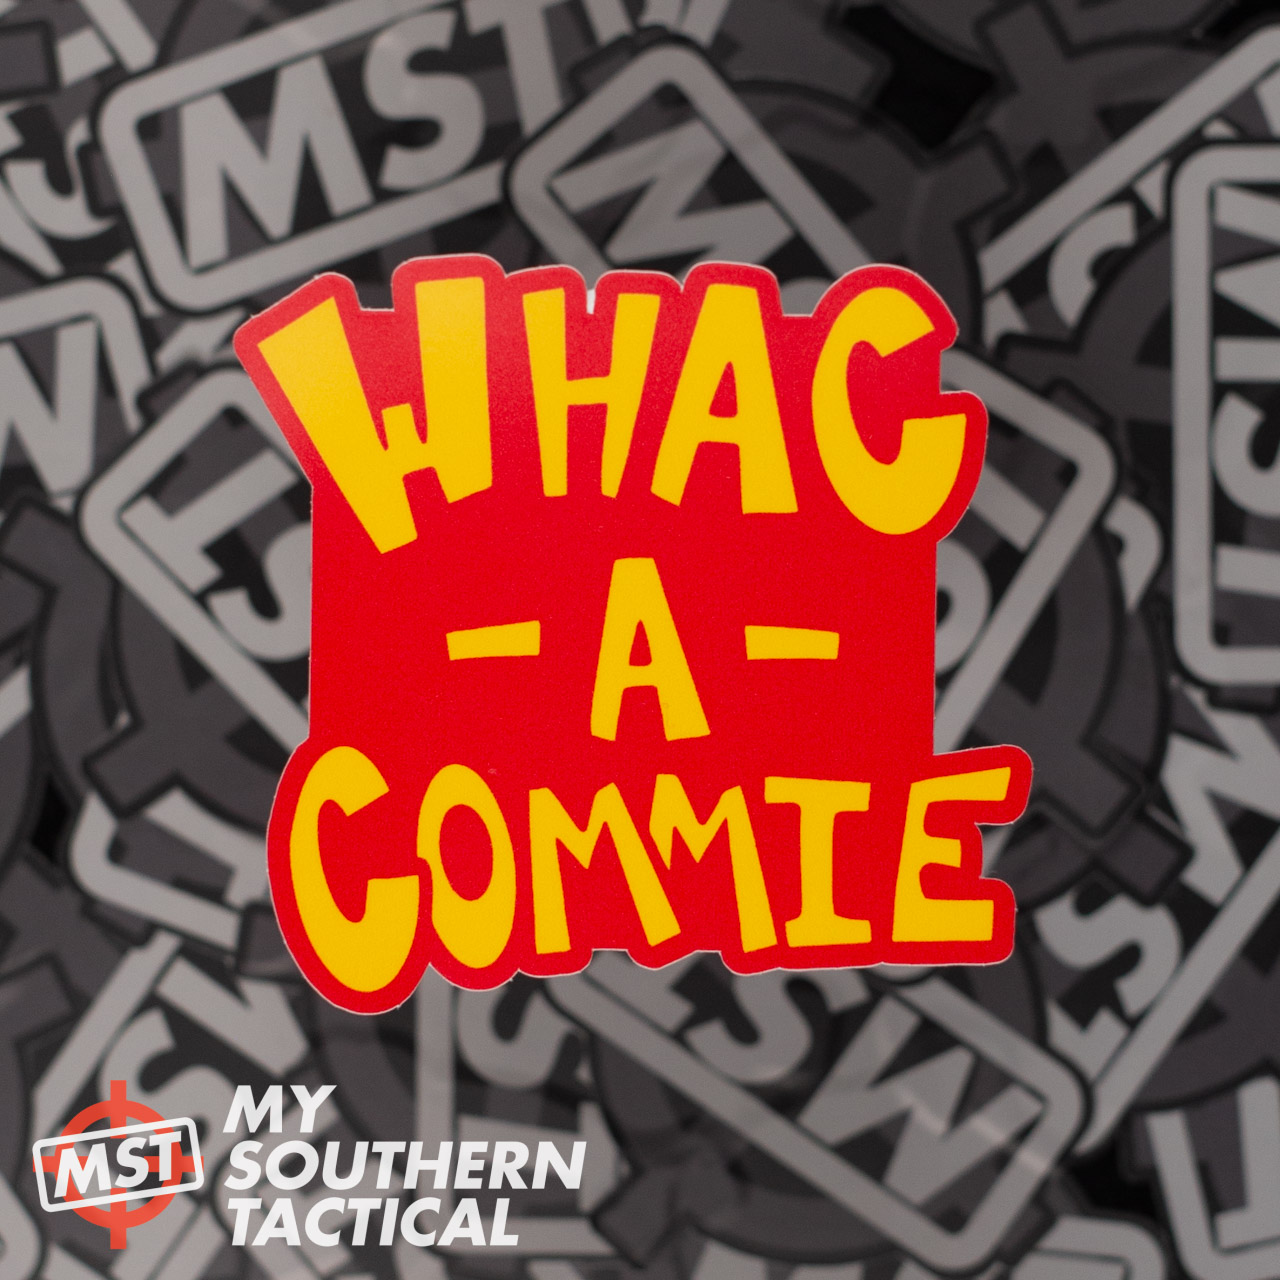 Whac-a-Commie Vinyl Sticker